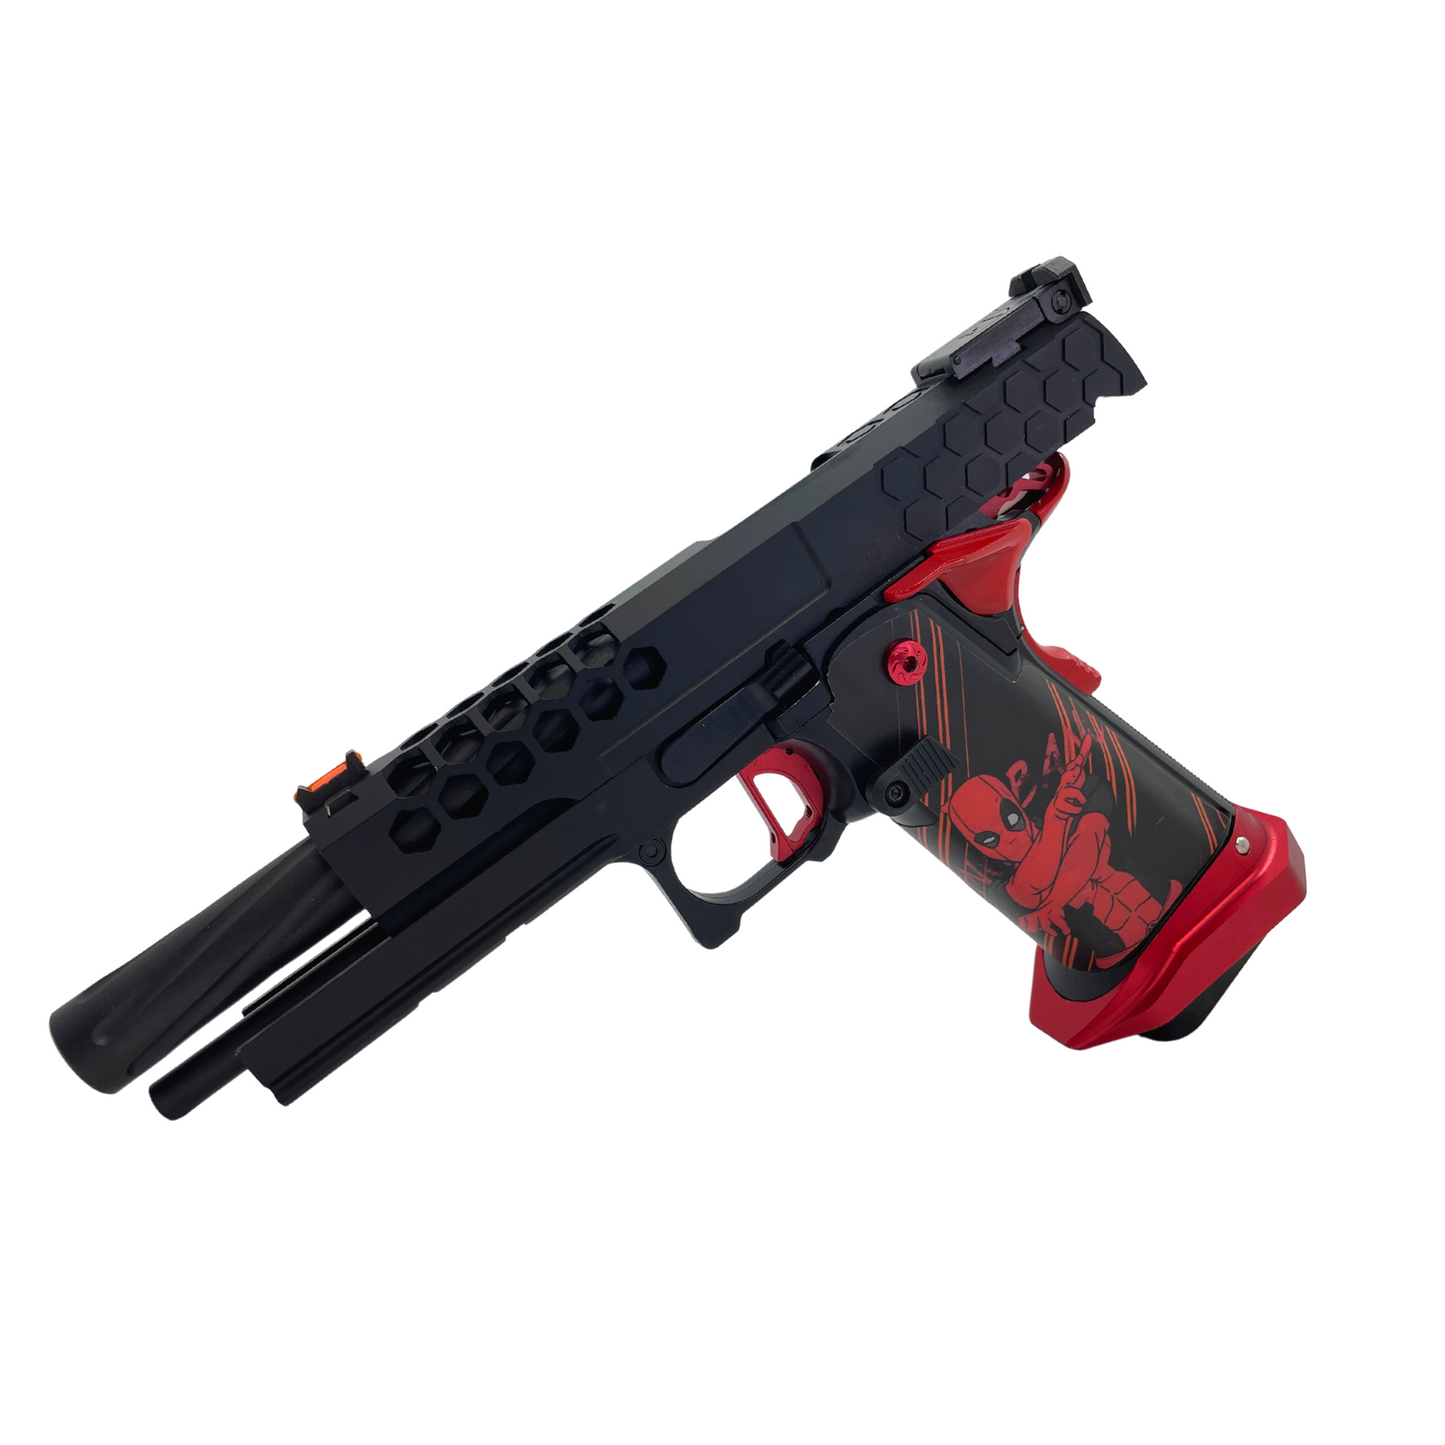 "Deadpool" Custom GBU Hi-Capa 5.1 Gas Pistol - Gel Blaster